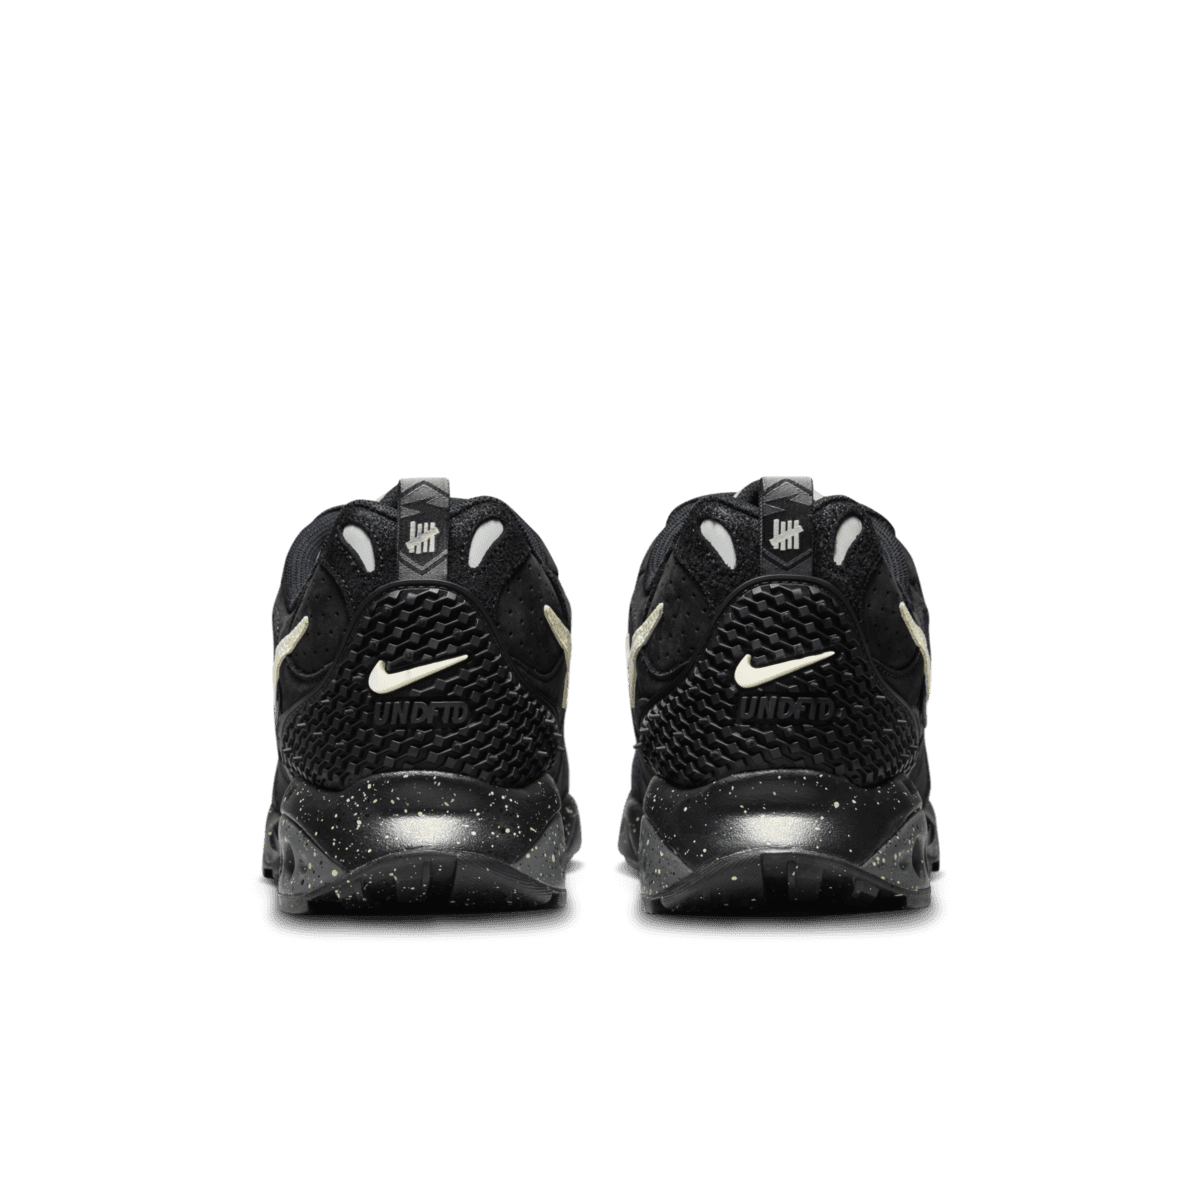 Undefeated x Nike Air Terra Humara 'Black'